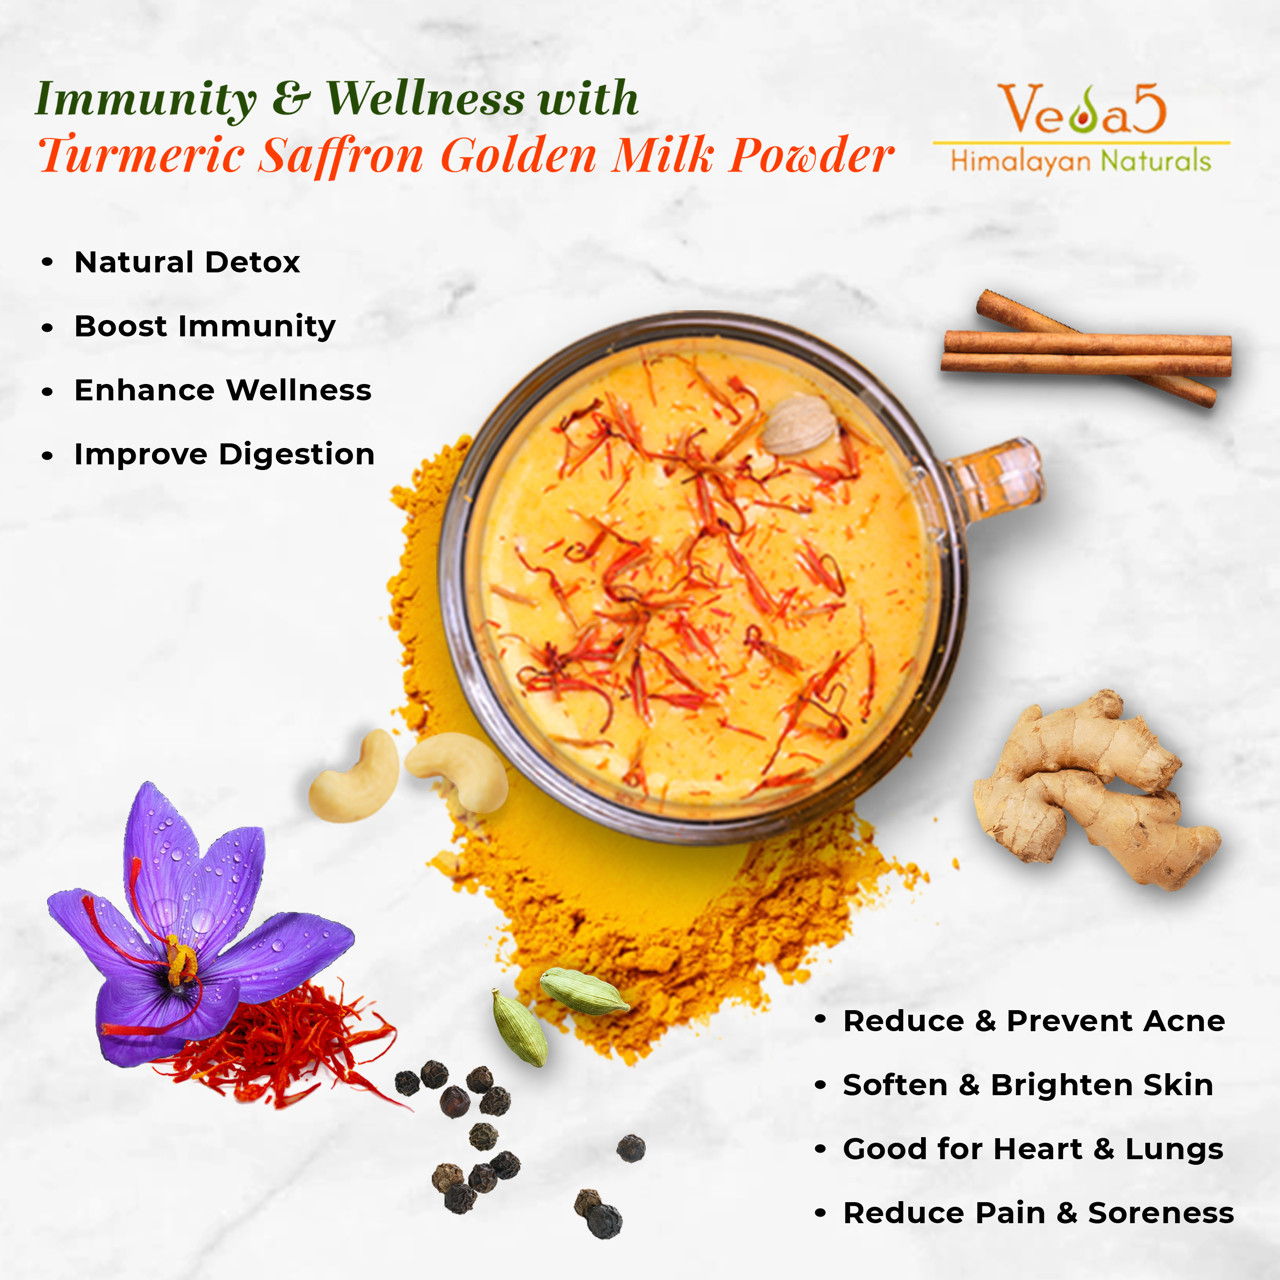 Turmeric Saffron Golden Milk Powder Benefits Veda5 Himalayan Naturals